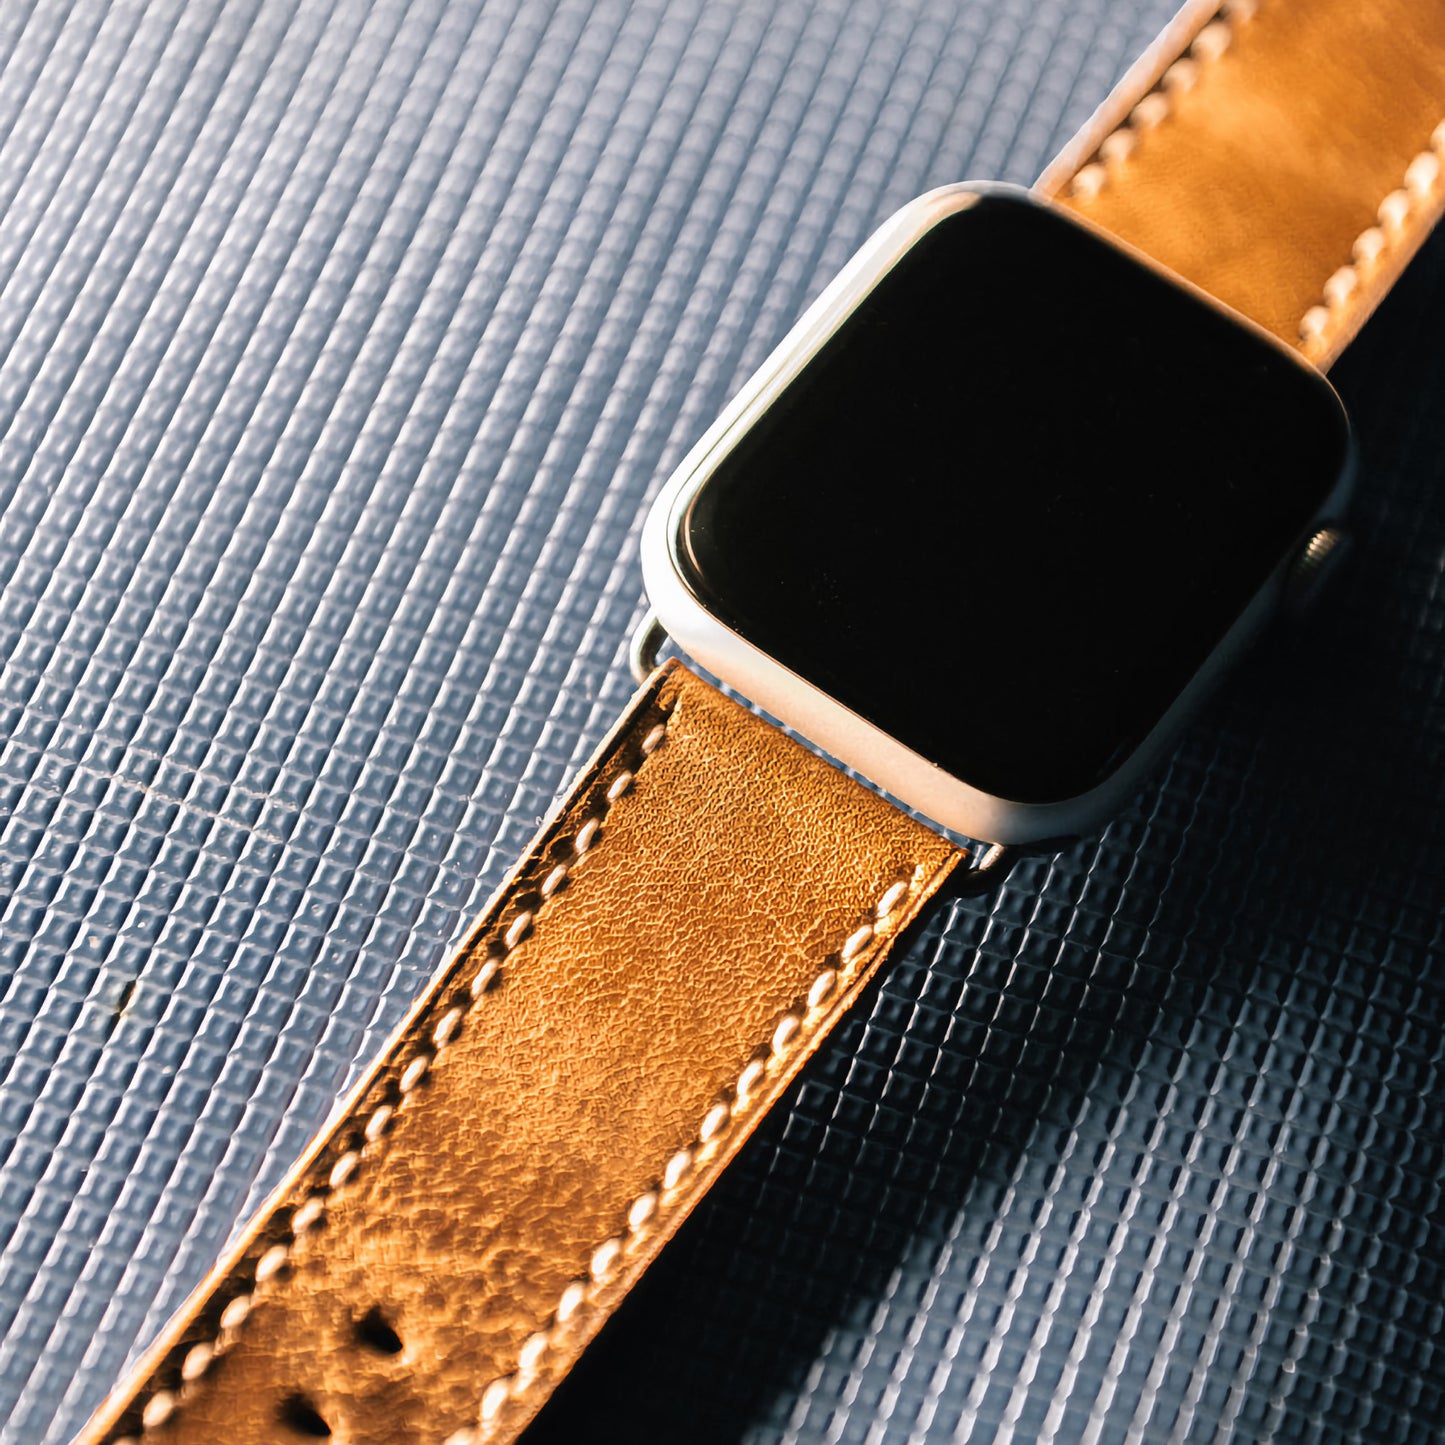 arktisband Riemchen Apple Watch Armband by Zirkeltraining